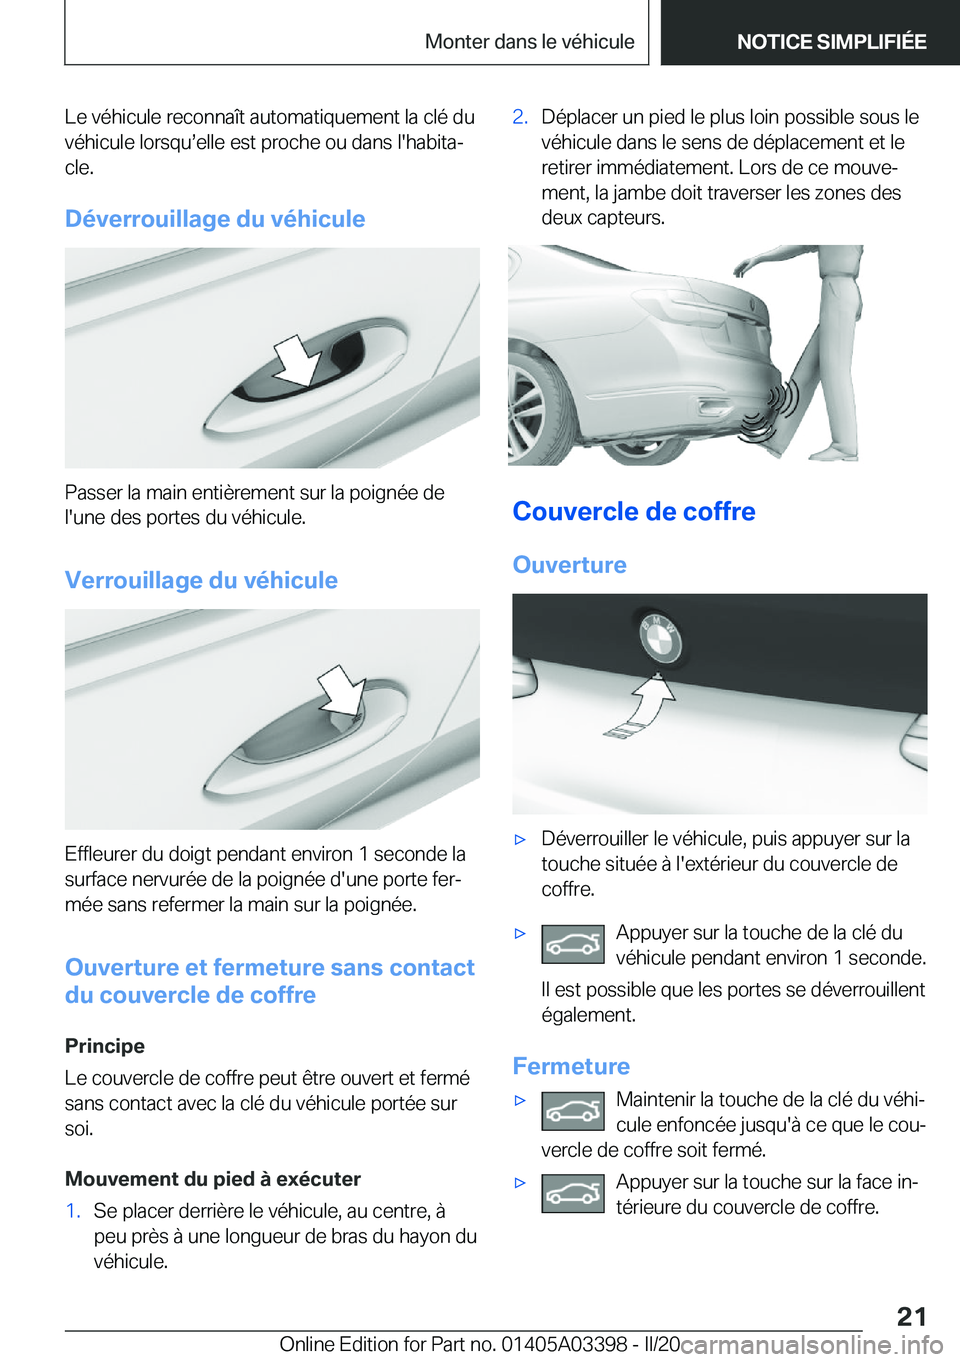 BMW M8 GRAN COUPE 2020  Notices Demploi (in French) �L�e��v�é�h�i�c�u�l�e��r�e�c�o�n�n�a�